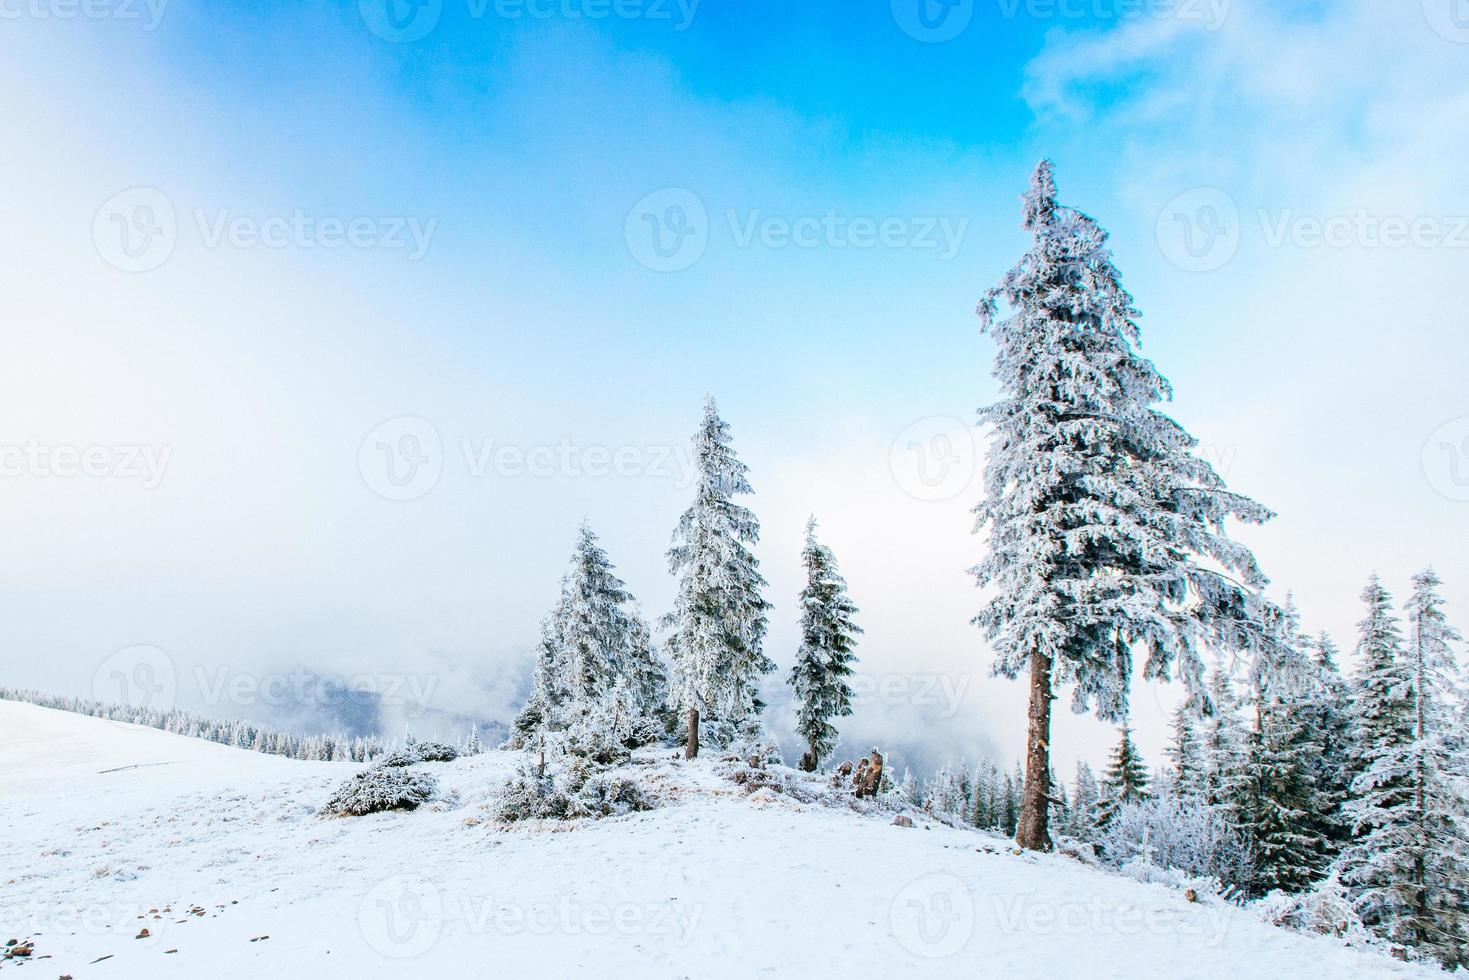 wunderbare Winterlandschaft foto